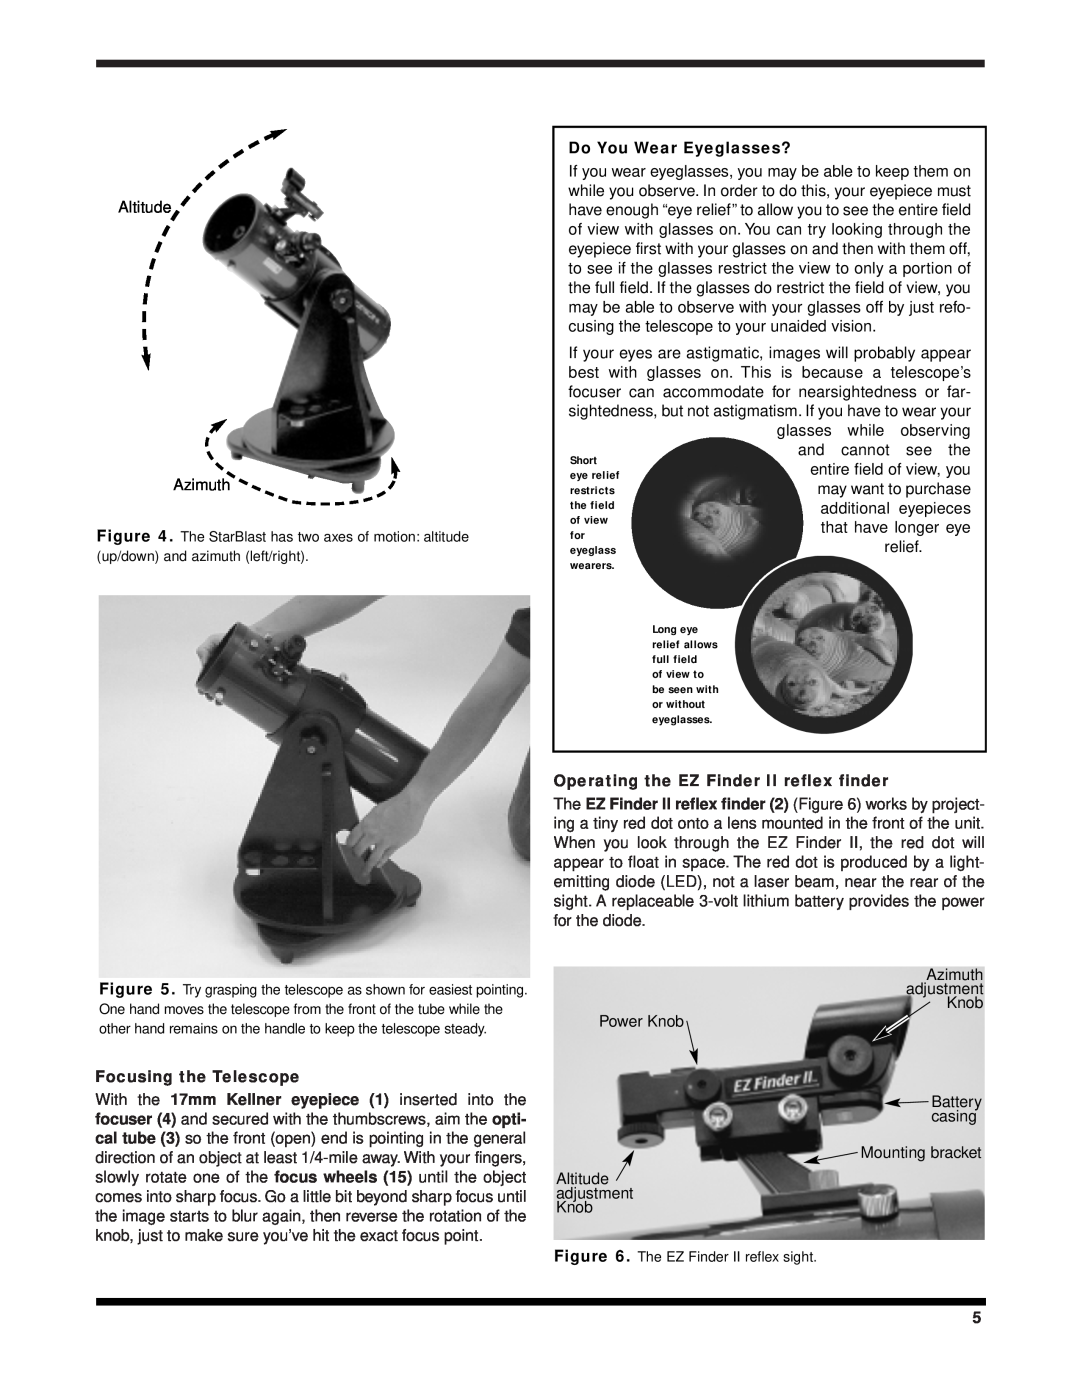 Orion 9814 instruction manual Do You Wear Eyeglasses?, Focusing the Telescope, Operating the EZ Finder II reflex finder 